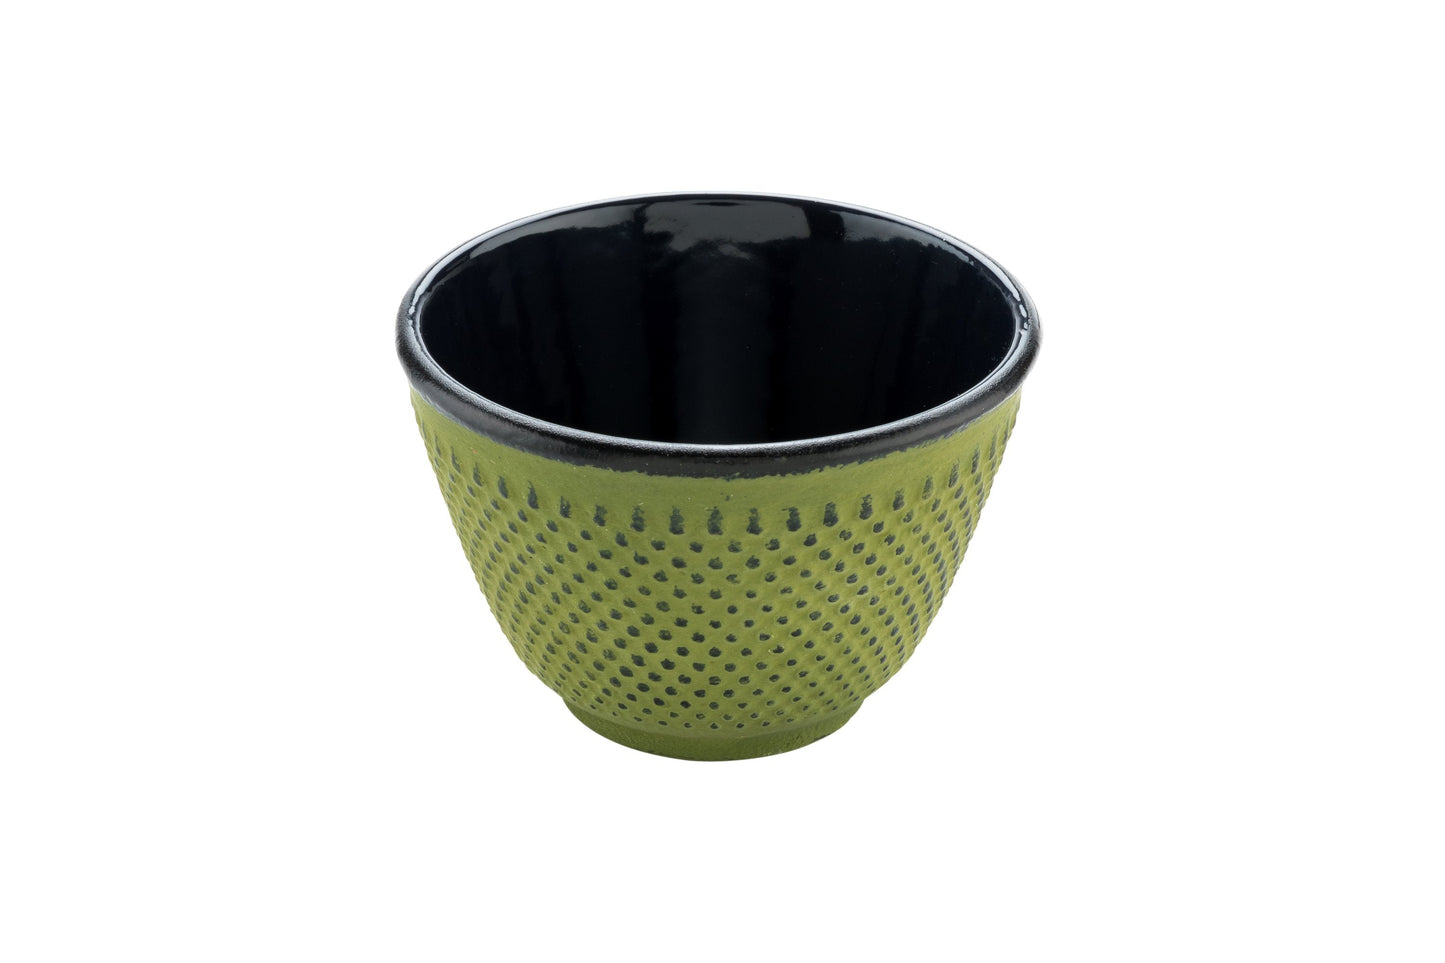 Tetsubin 4 oz Green Cast Iron Tea Cup - Hobnail - 3" x 3" x 3 1/4" - 2 count box